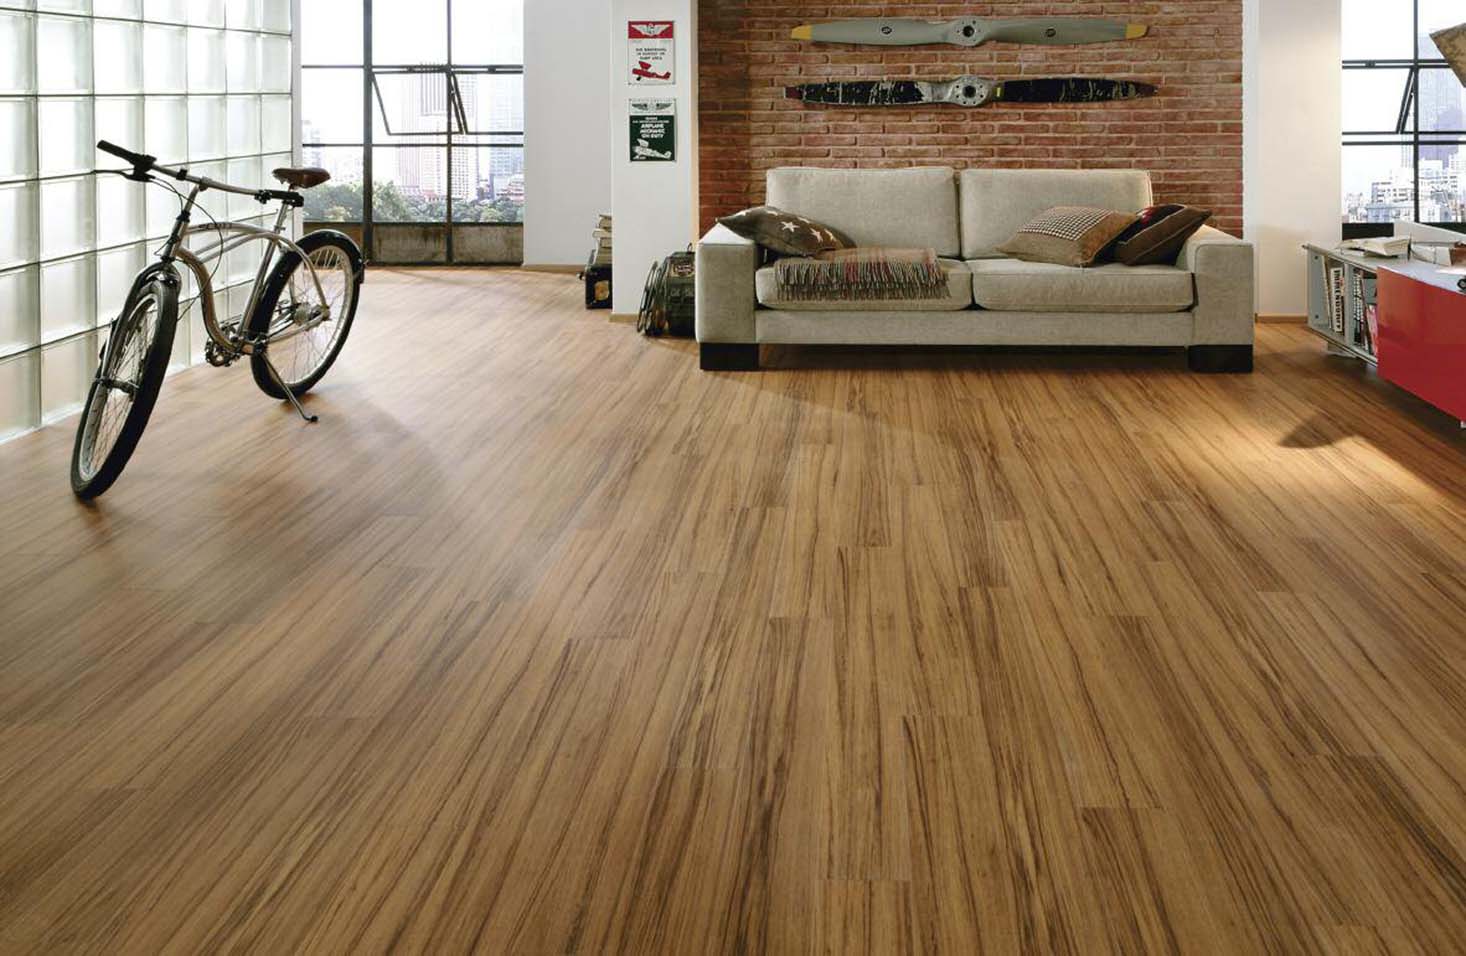 Laminate hardwood flooring